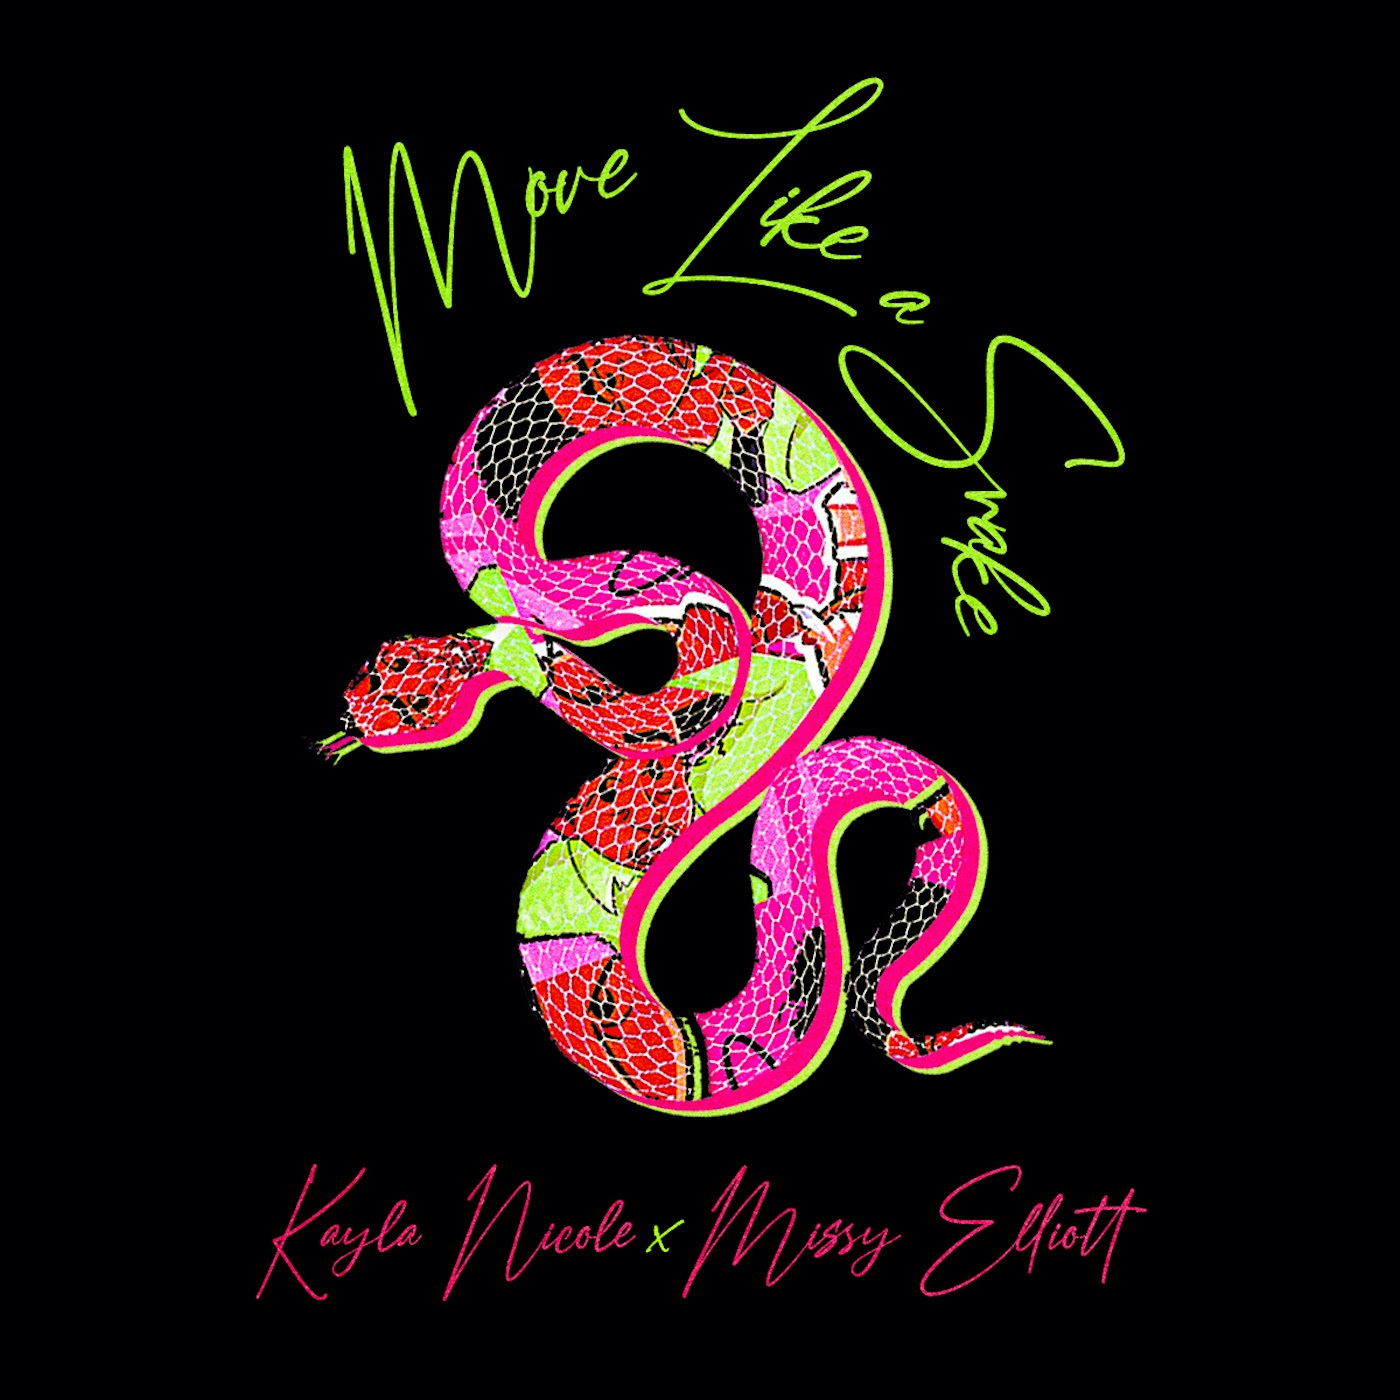 Missy Elliott Links With Youtube Sensation Kayla Nicole For Remix of